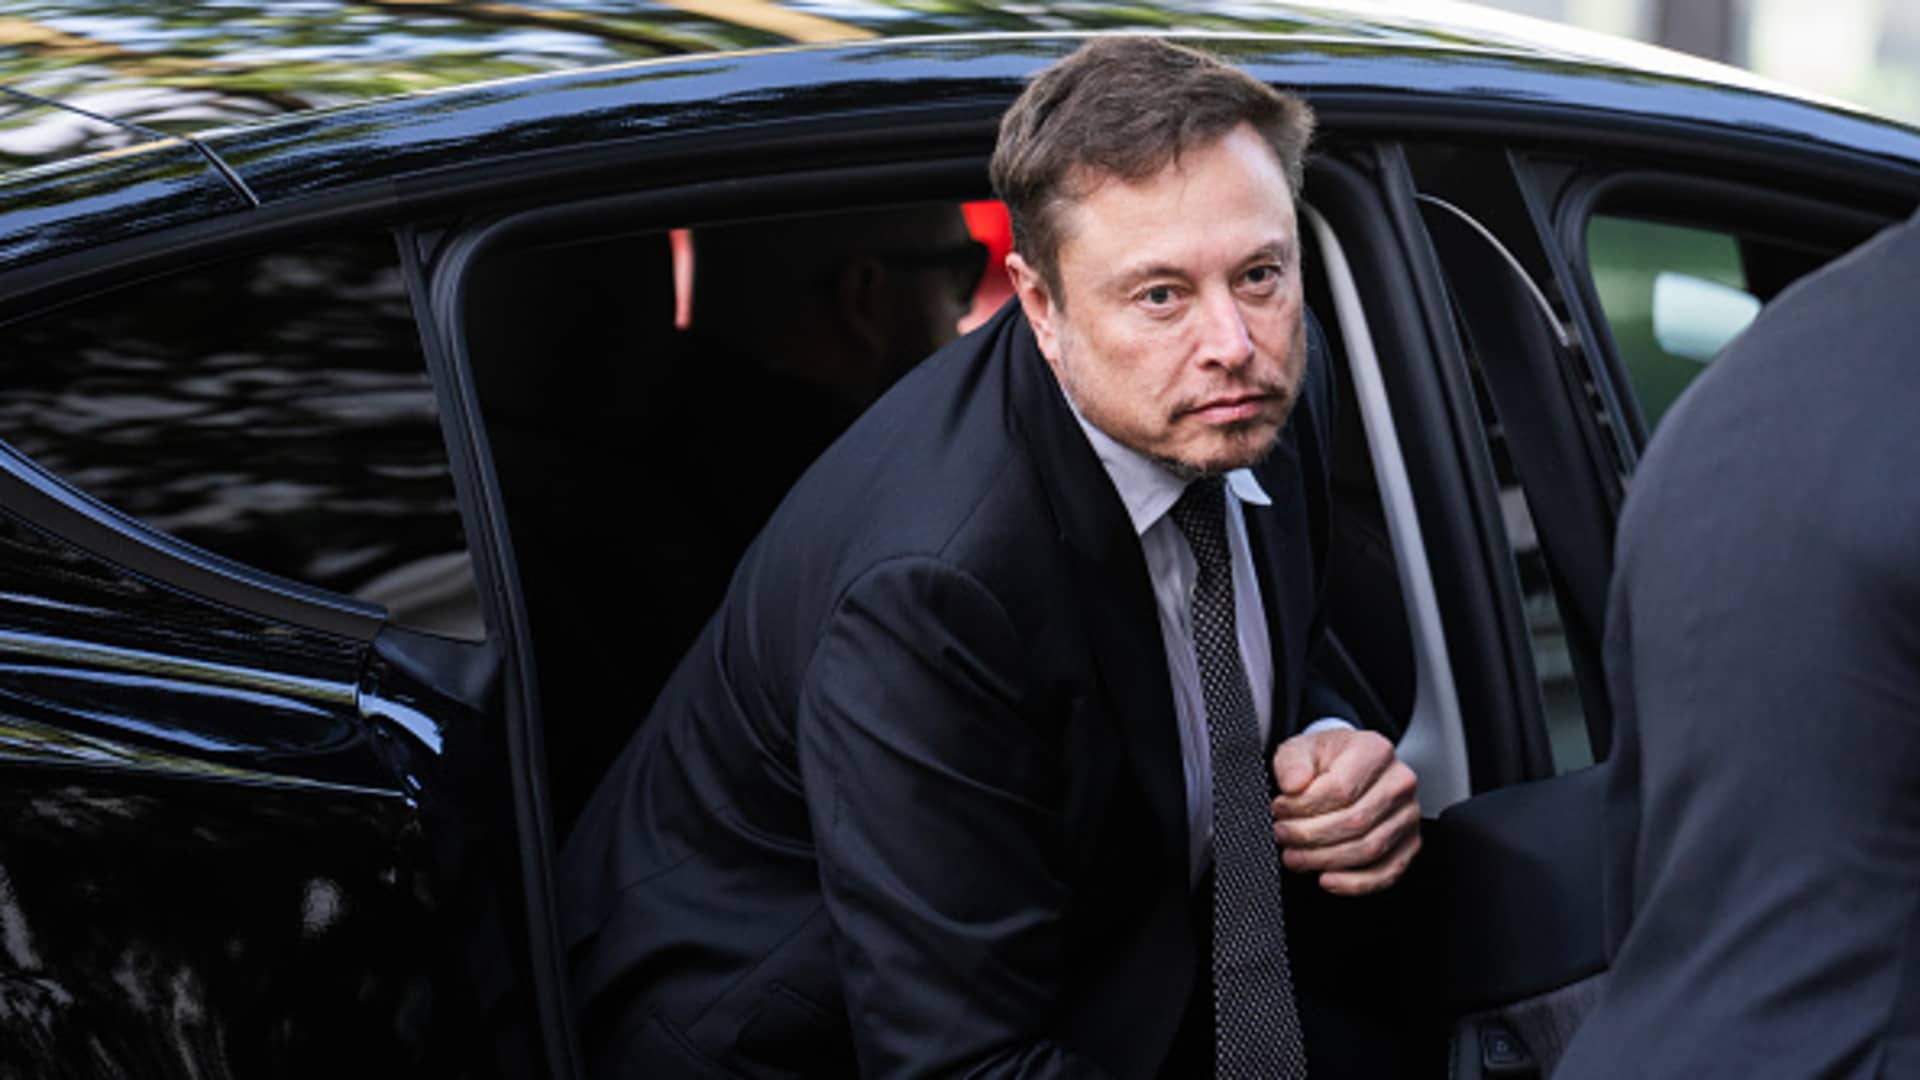 Turkish President Erdogan invites Elon Musk to build his next Tesla factory in Turkey - CNBC